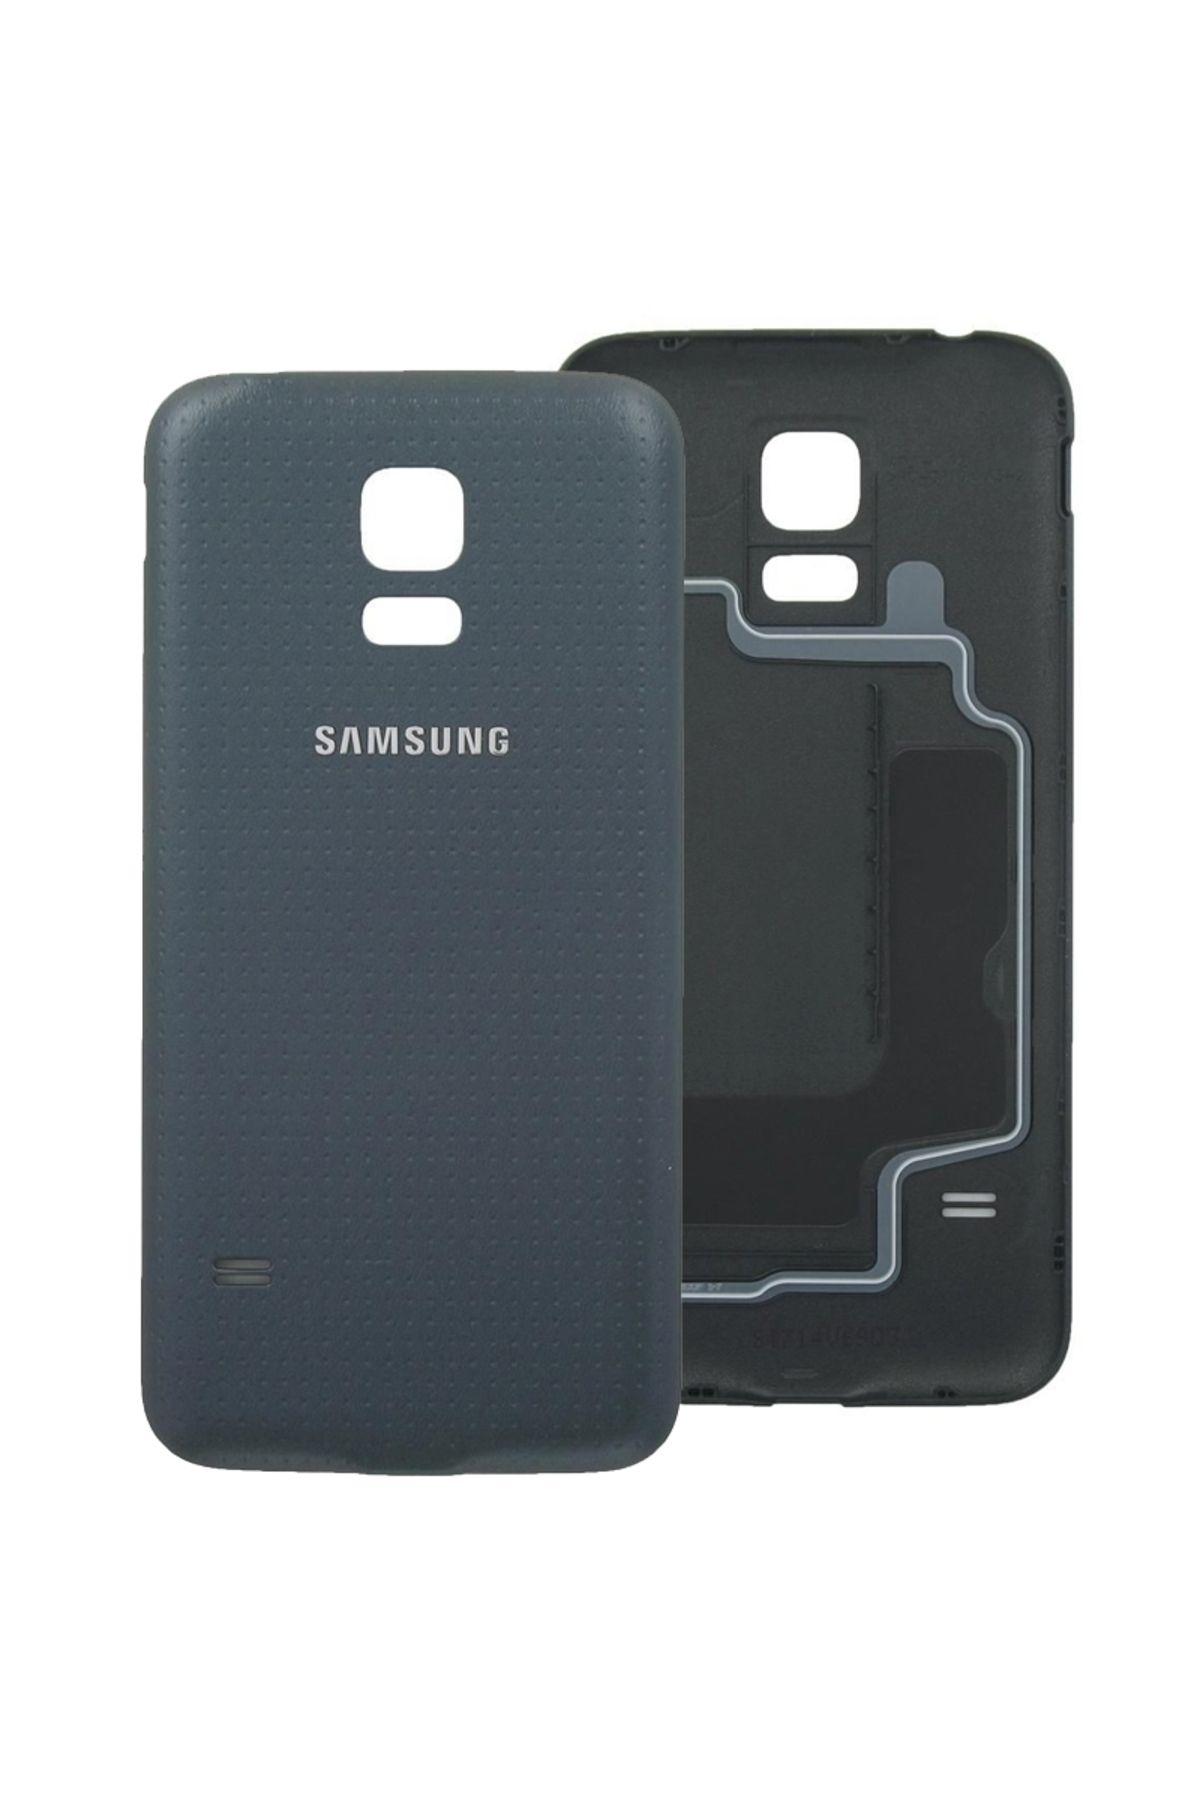 Basriko VORABELA Samsung Galaxy S5 Mini Arka Batarya Kapağı